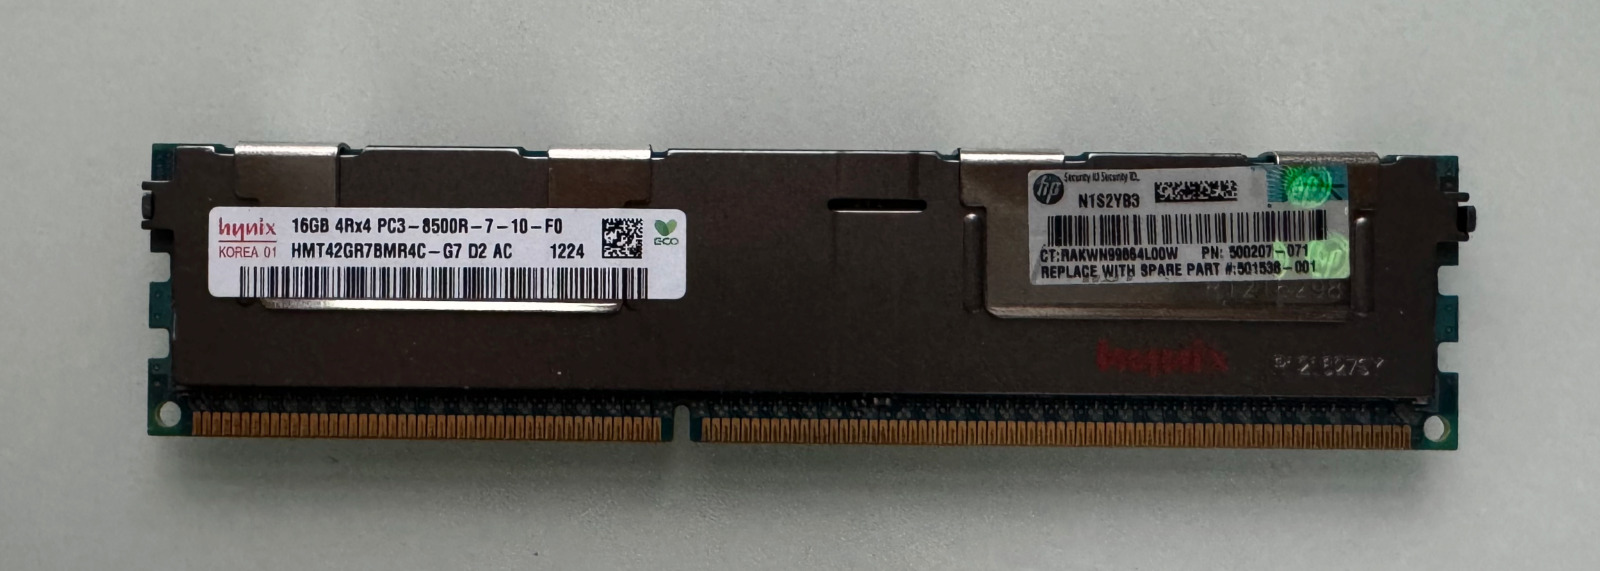 SERVER RAM - HYNIX *LOT OF 24* 16GB 4RX4 PC3 - 8500R HMT42GR7BMR4C-G7